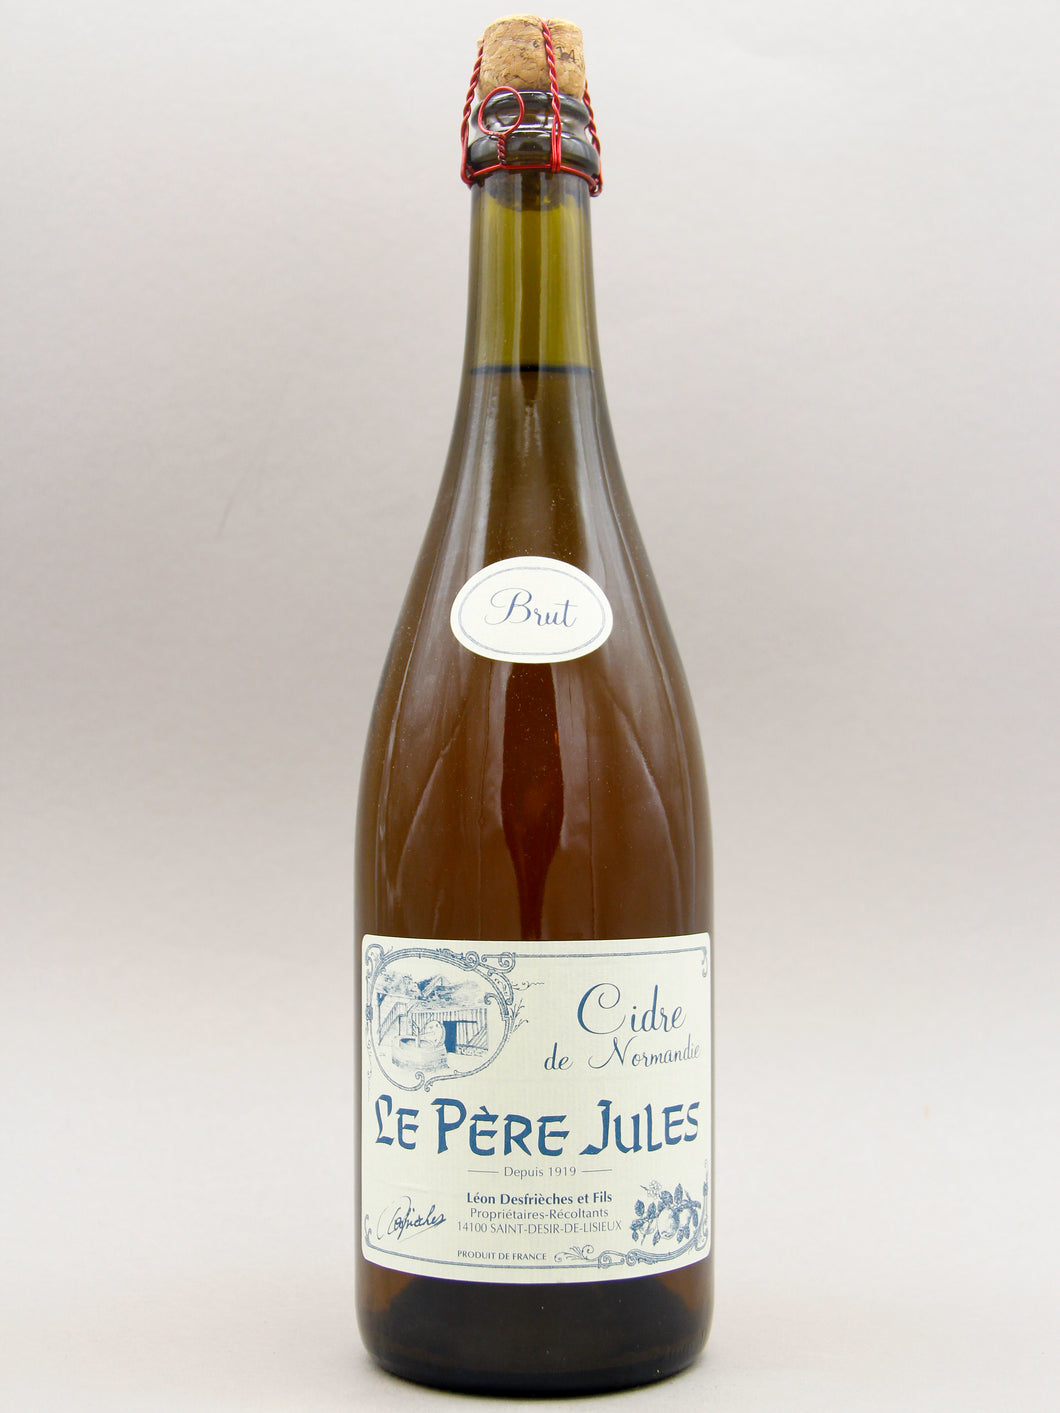 Le Pere Jules Cider, France (5%, 75cl)